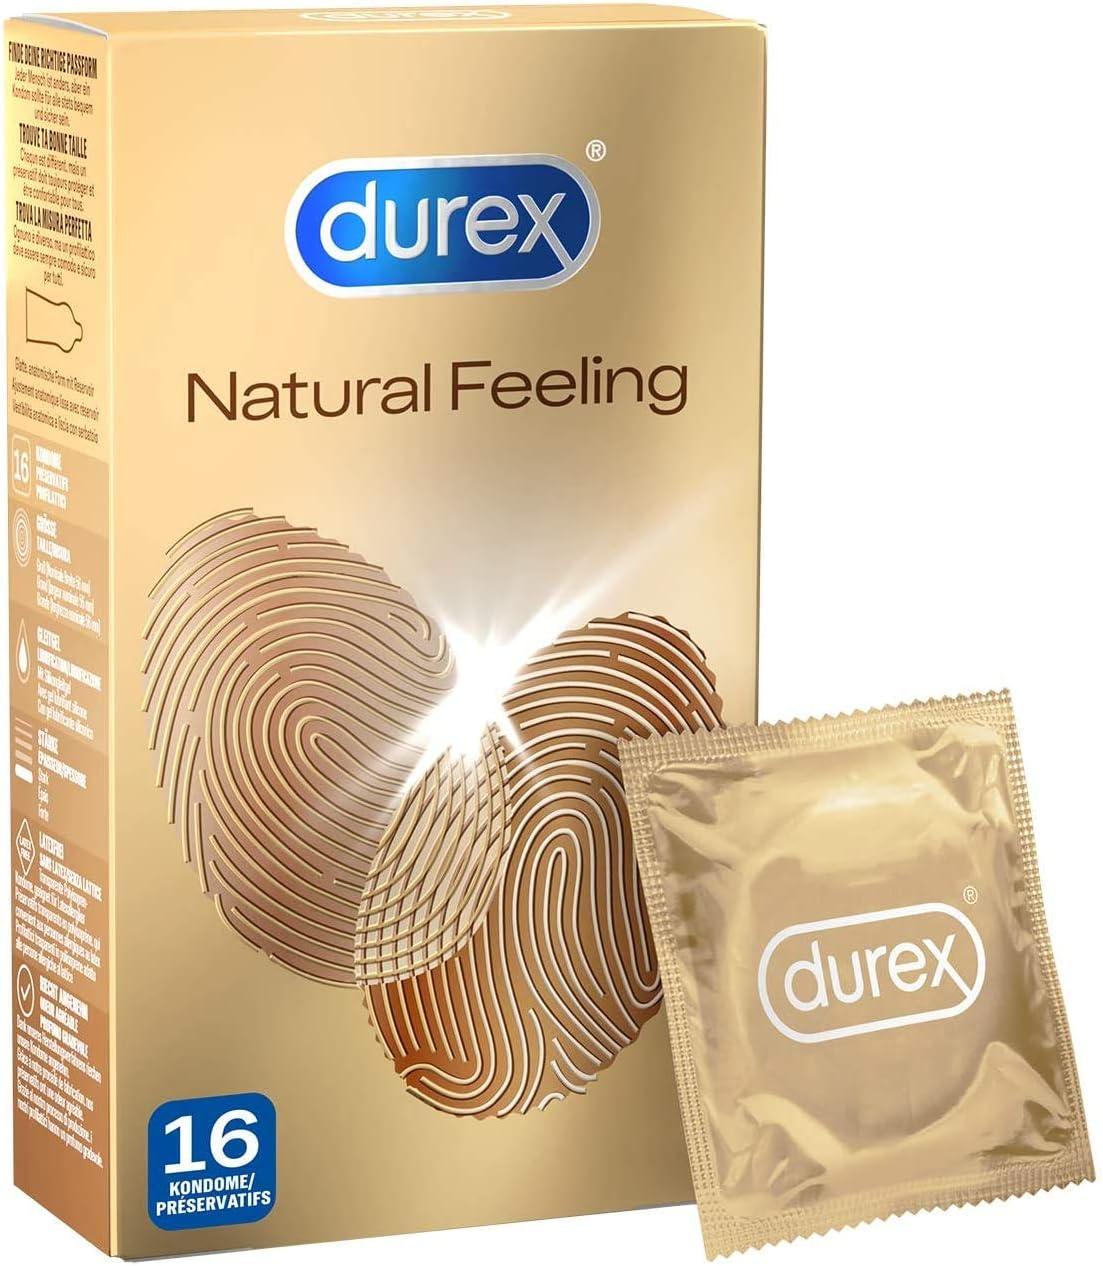 Durex Natural Feeling 16 Pack Condoms RRP £12 CLEARANCE XL £7.99